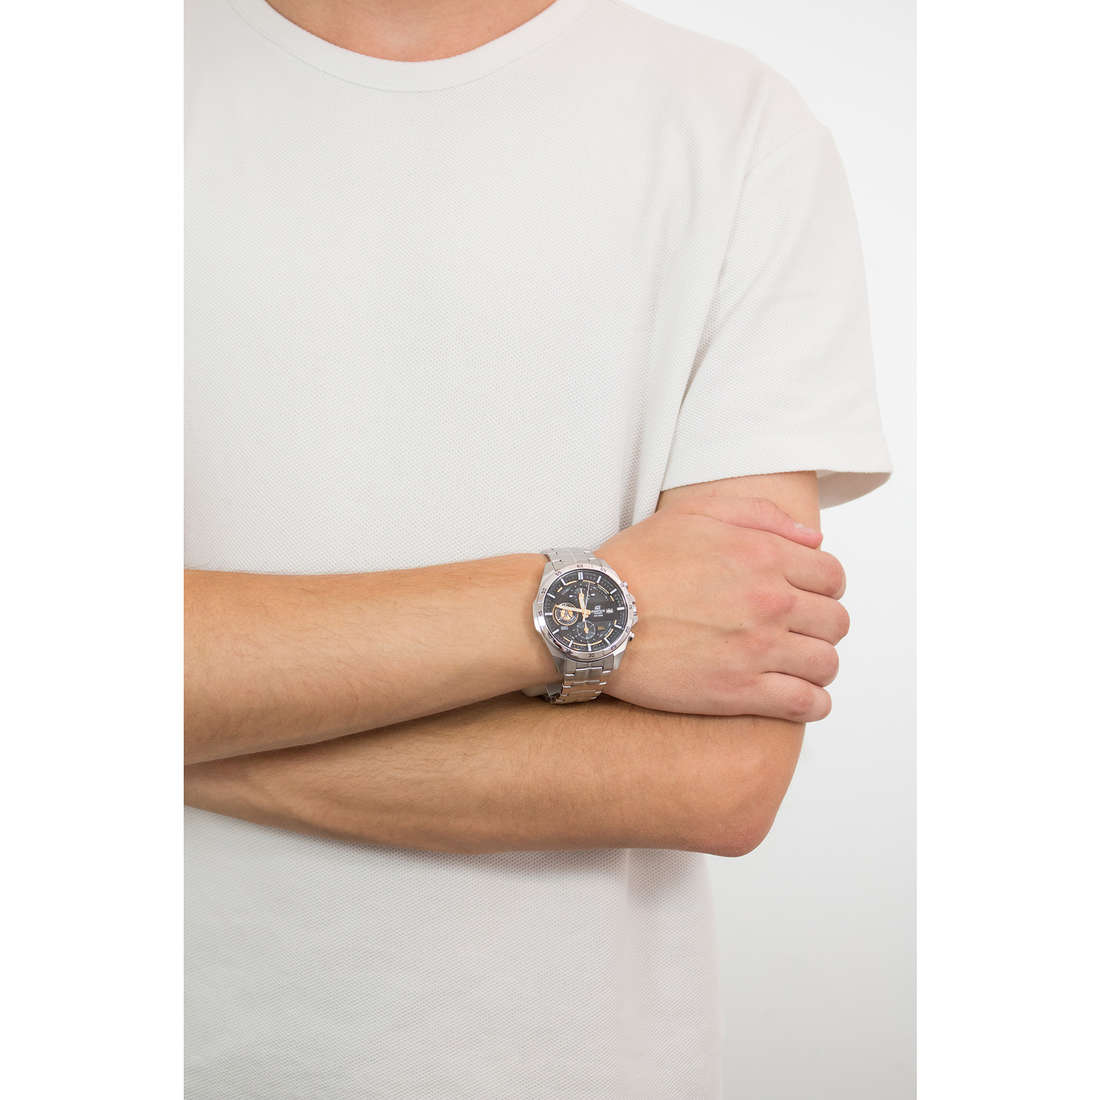 Casio chronographs Edifice man EFR-556D-1AVUEF wearing